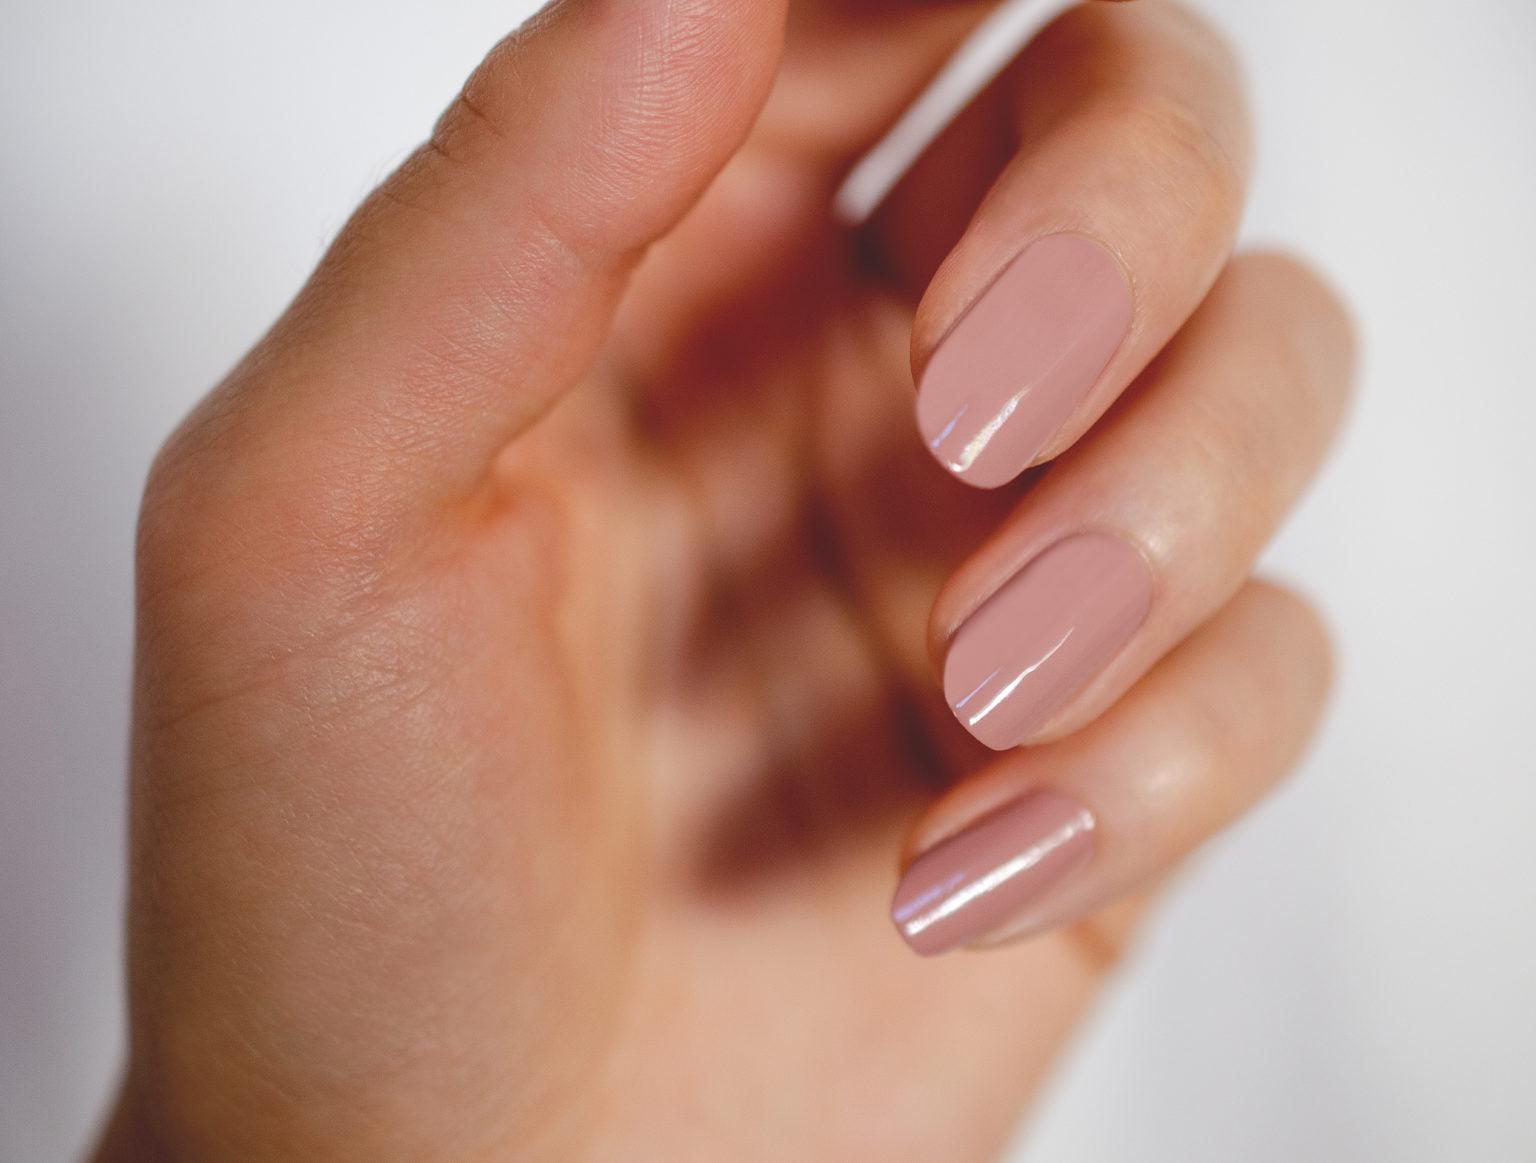 round nail shape with dusty pink nail polish